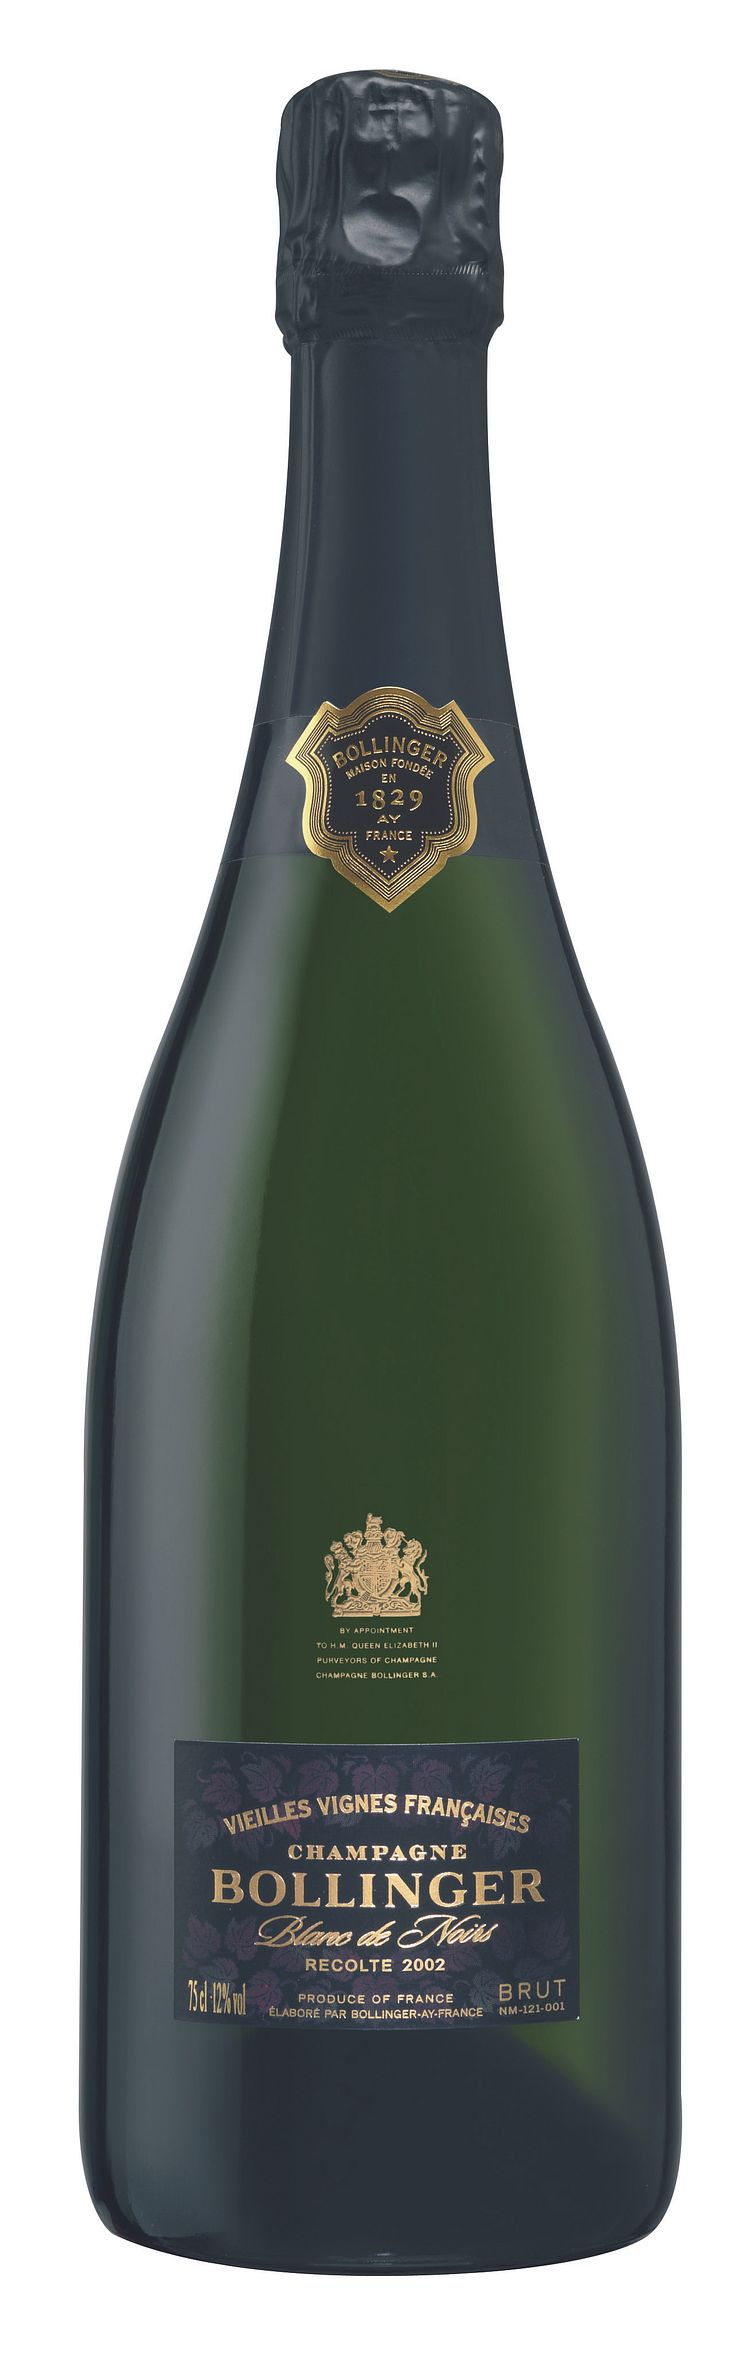 Bollinger Vieilles Vignes Françaises 2002 – Systembolagets dyraste Champagne